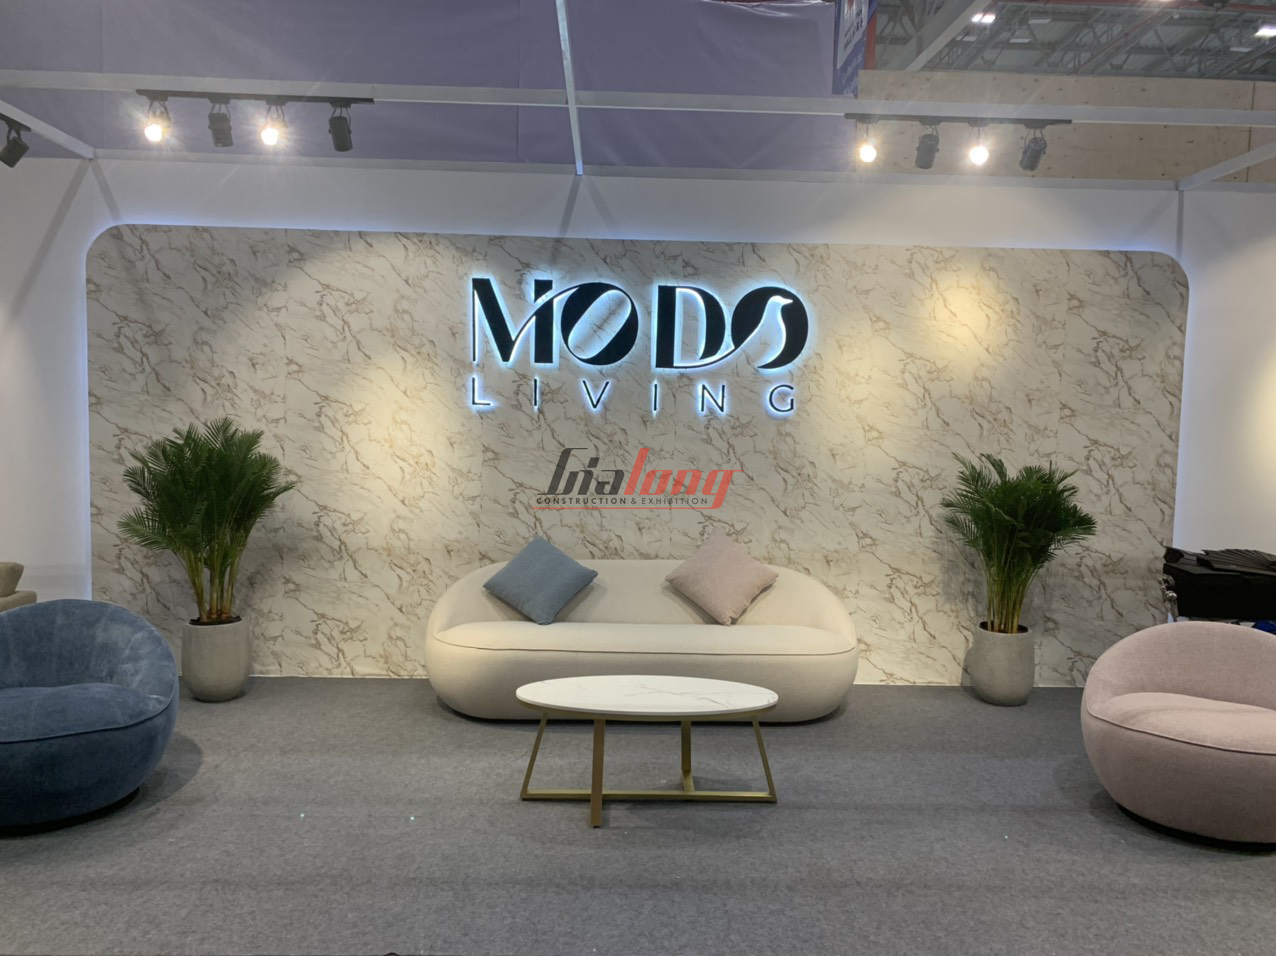 Modo Living - Thiết kế thi công gian hàng - Design and construction of booth vifa expo